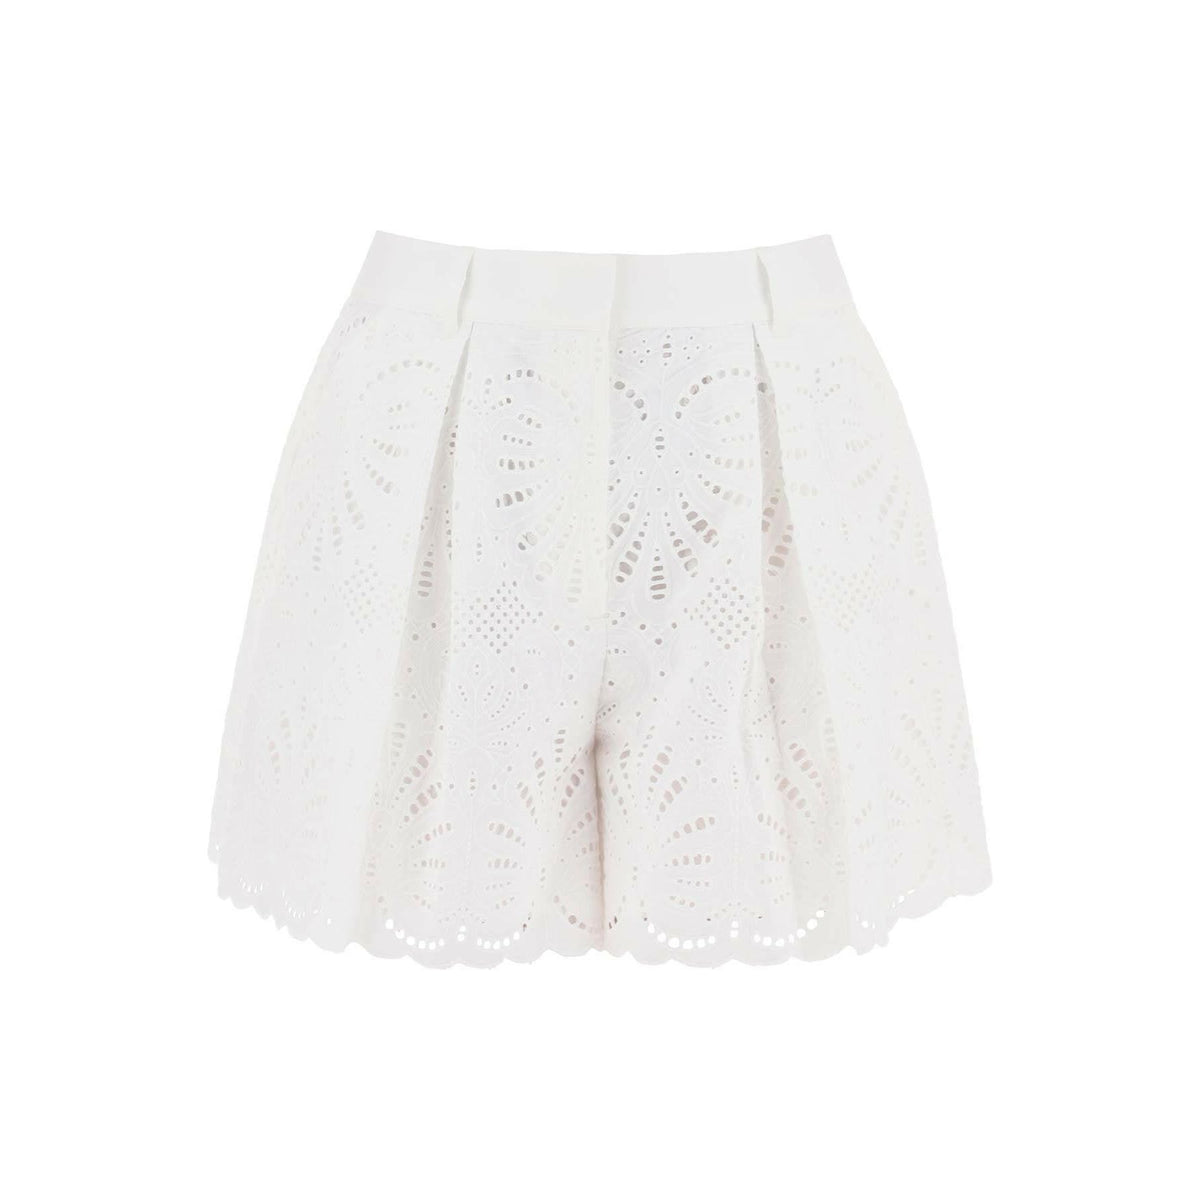 SELF PORTRAIT - White Lace Cotton Short with scalloped edges - JOHN JULIA